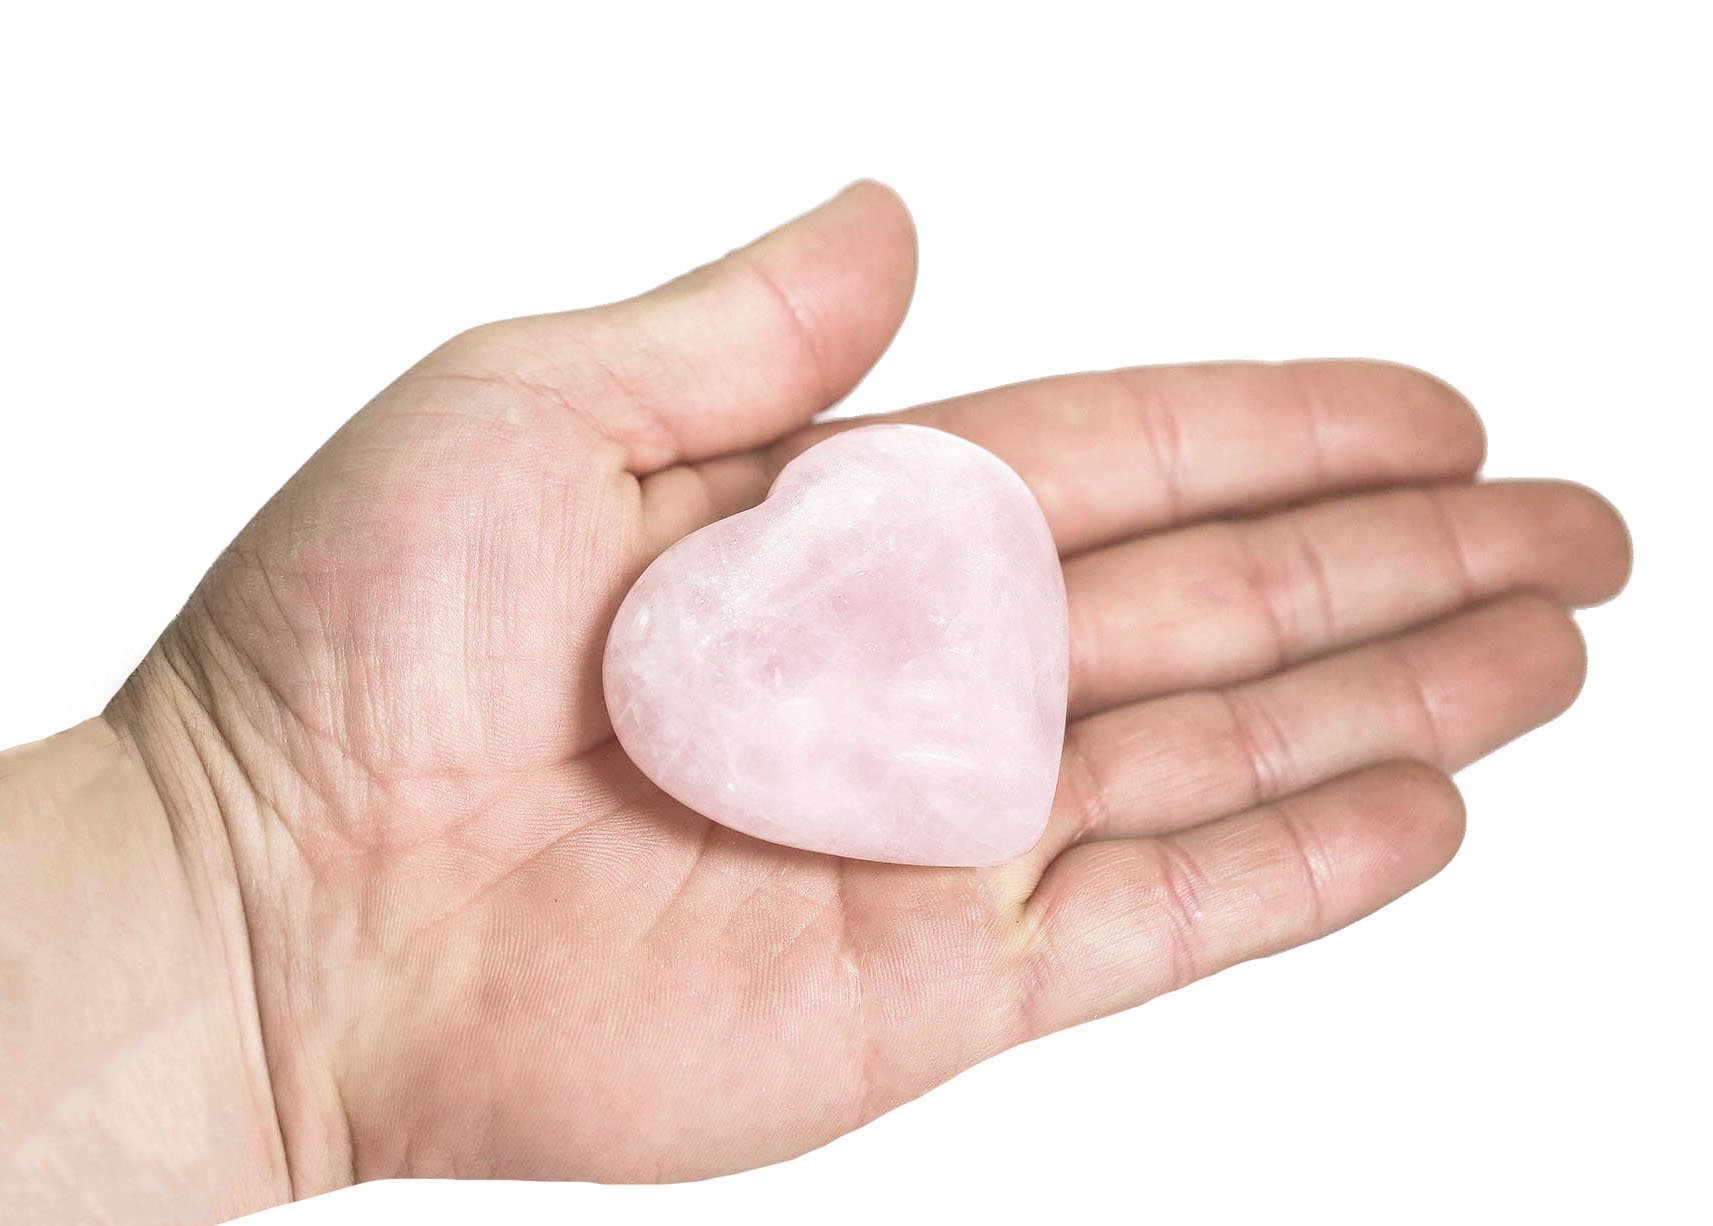 rose quartz puffy heart (hand) - Crystal Dreams